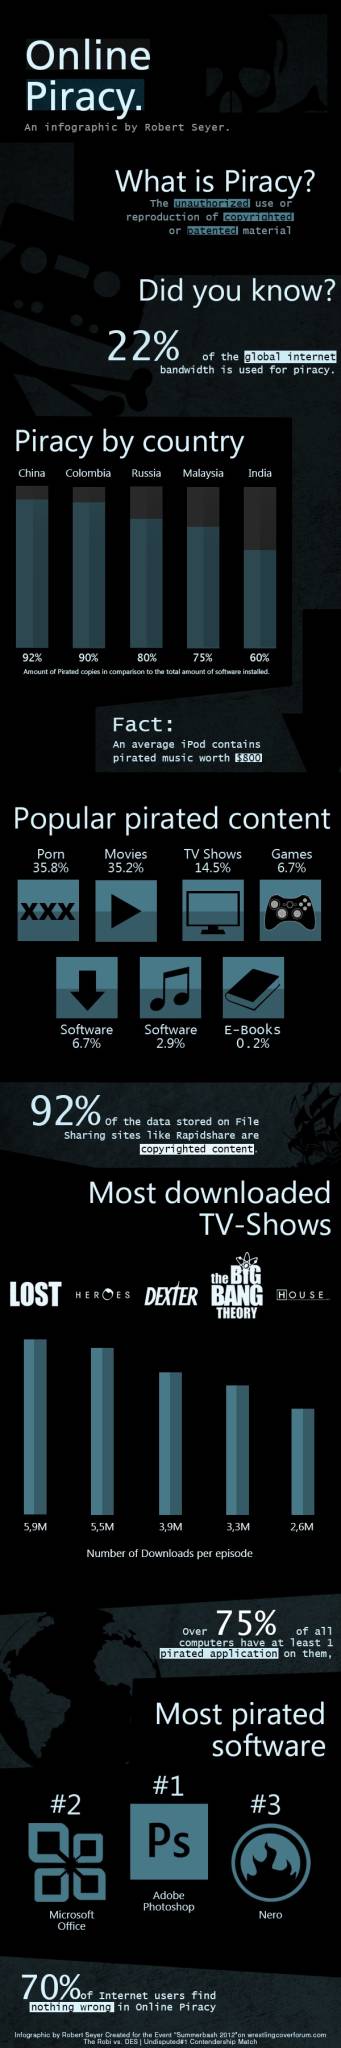 Datos sobre la piratería online #infografia